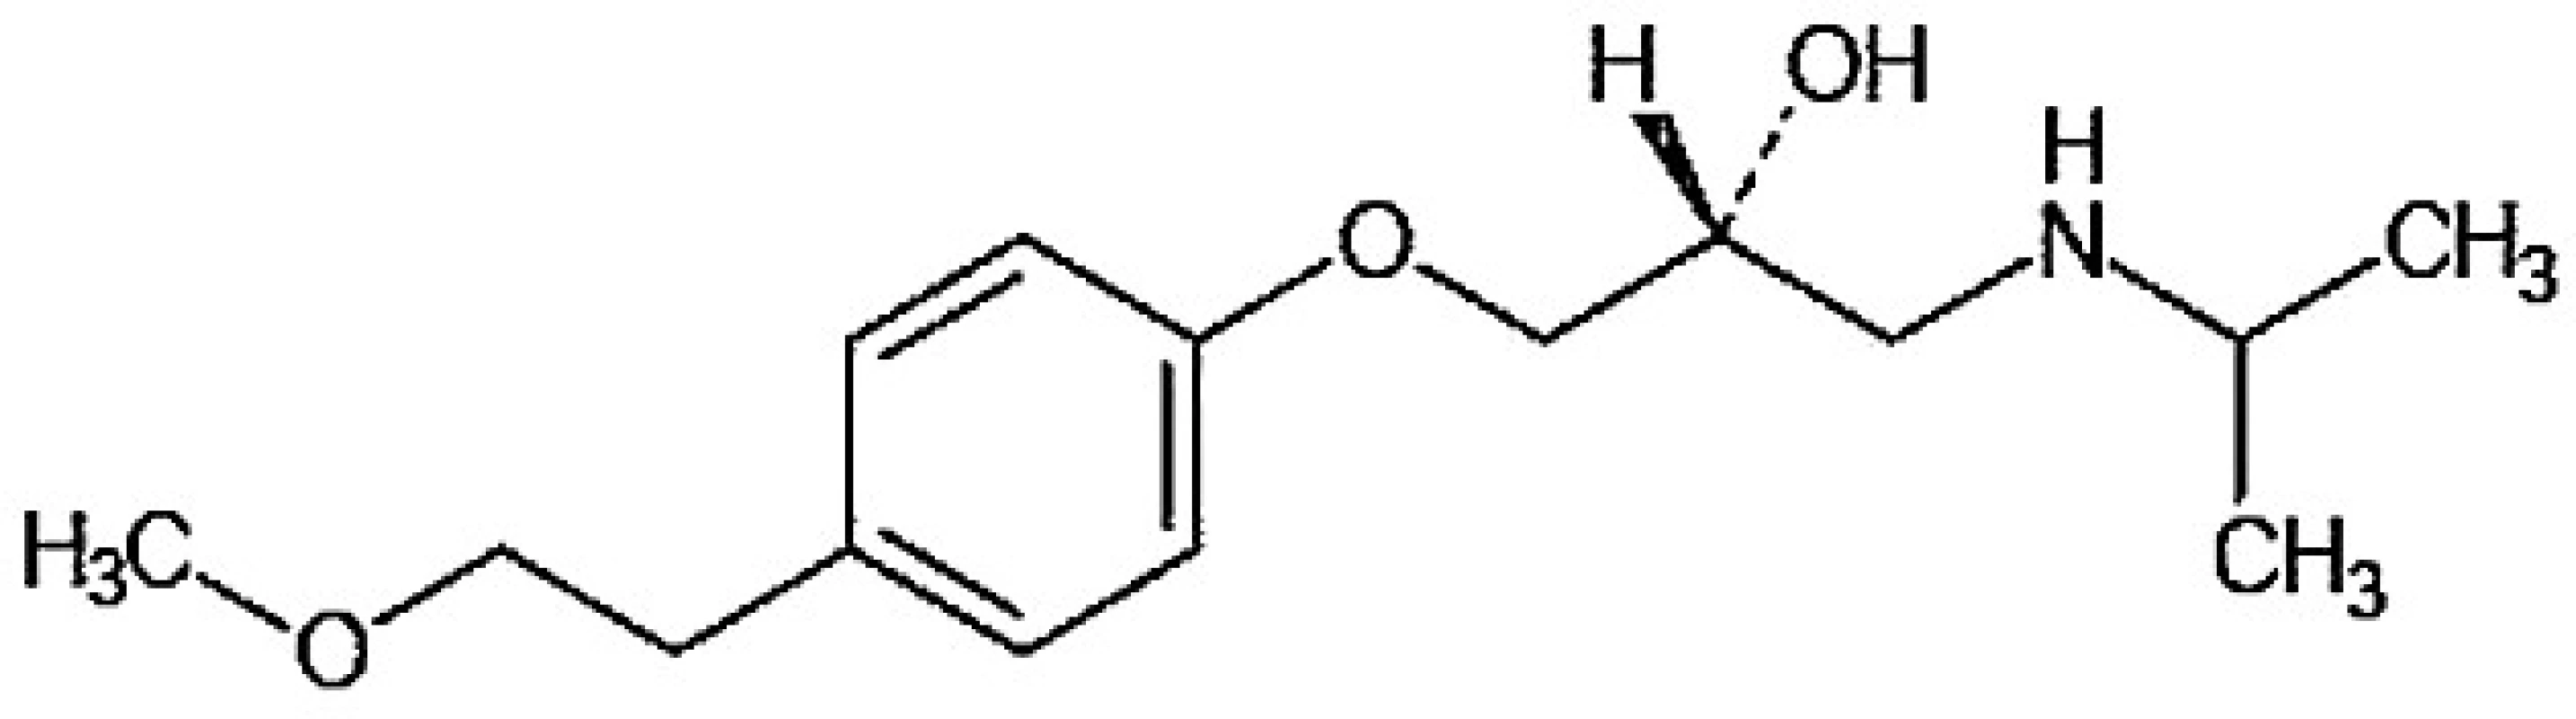 Chemický vzorec metoprololu